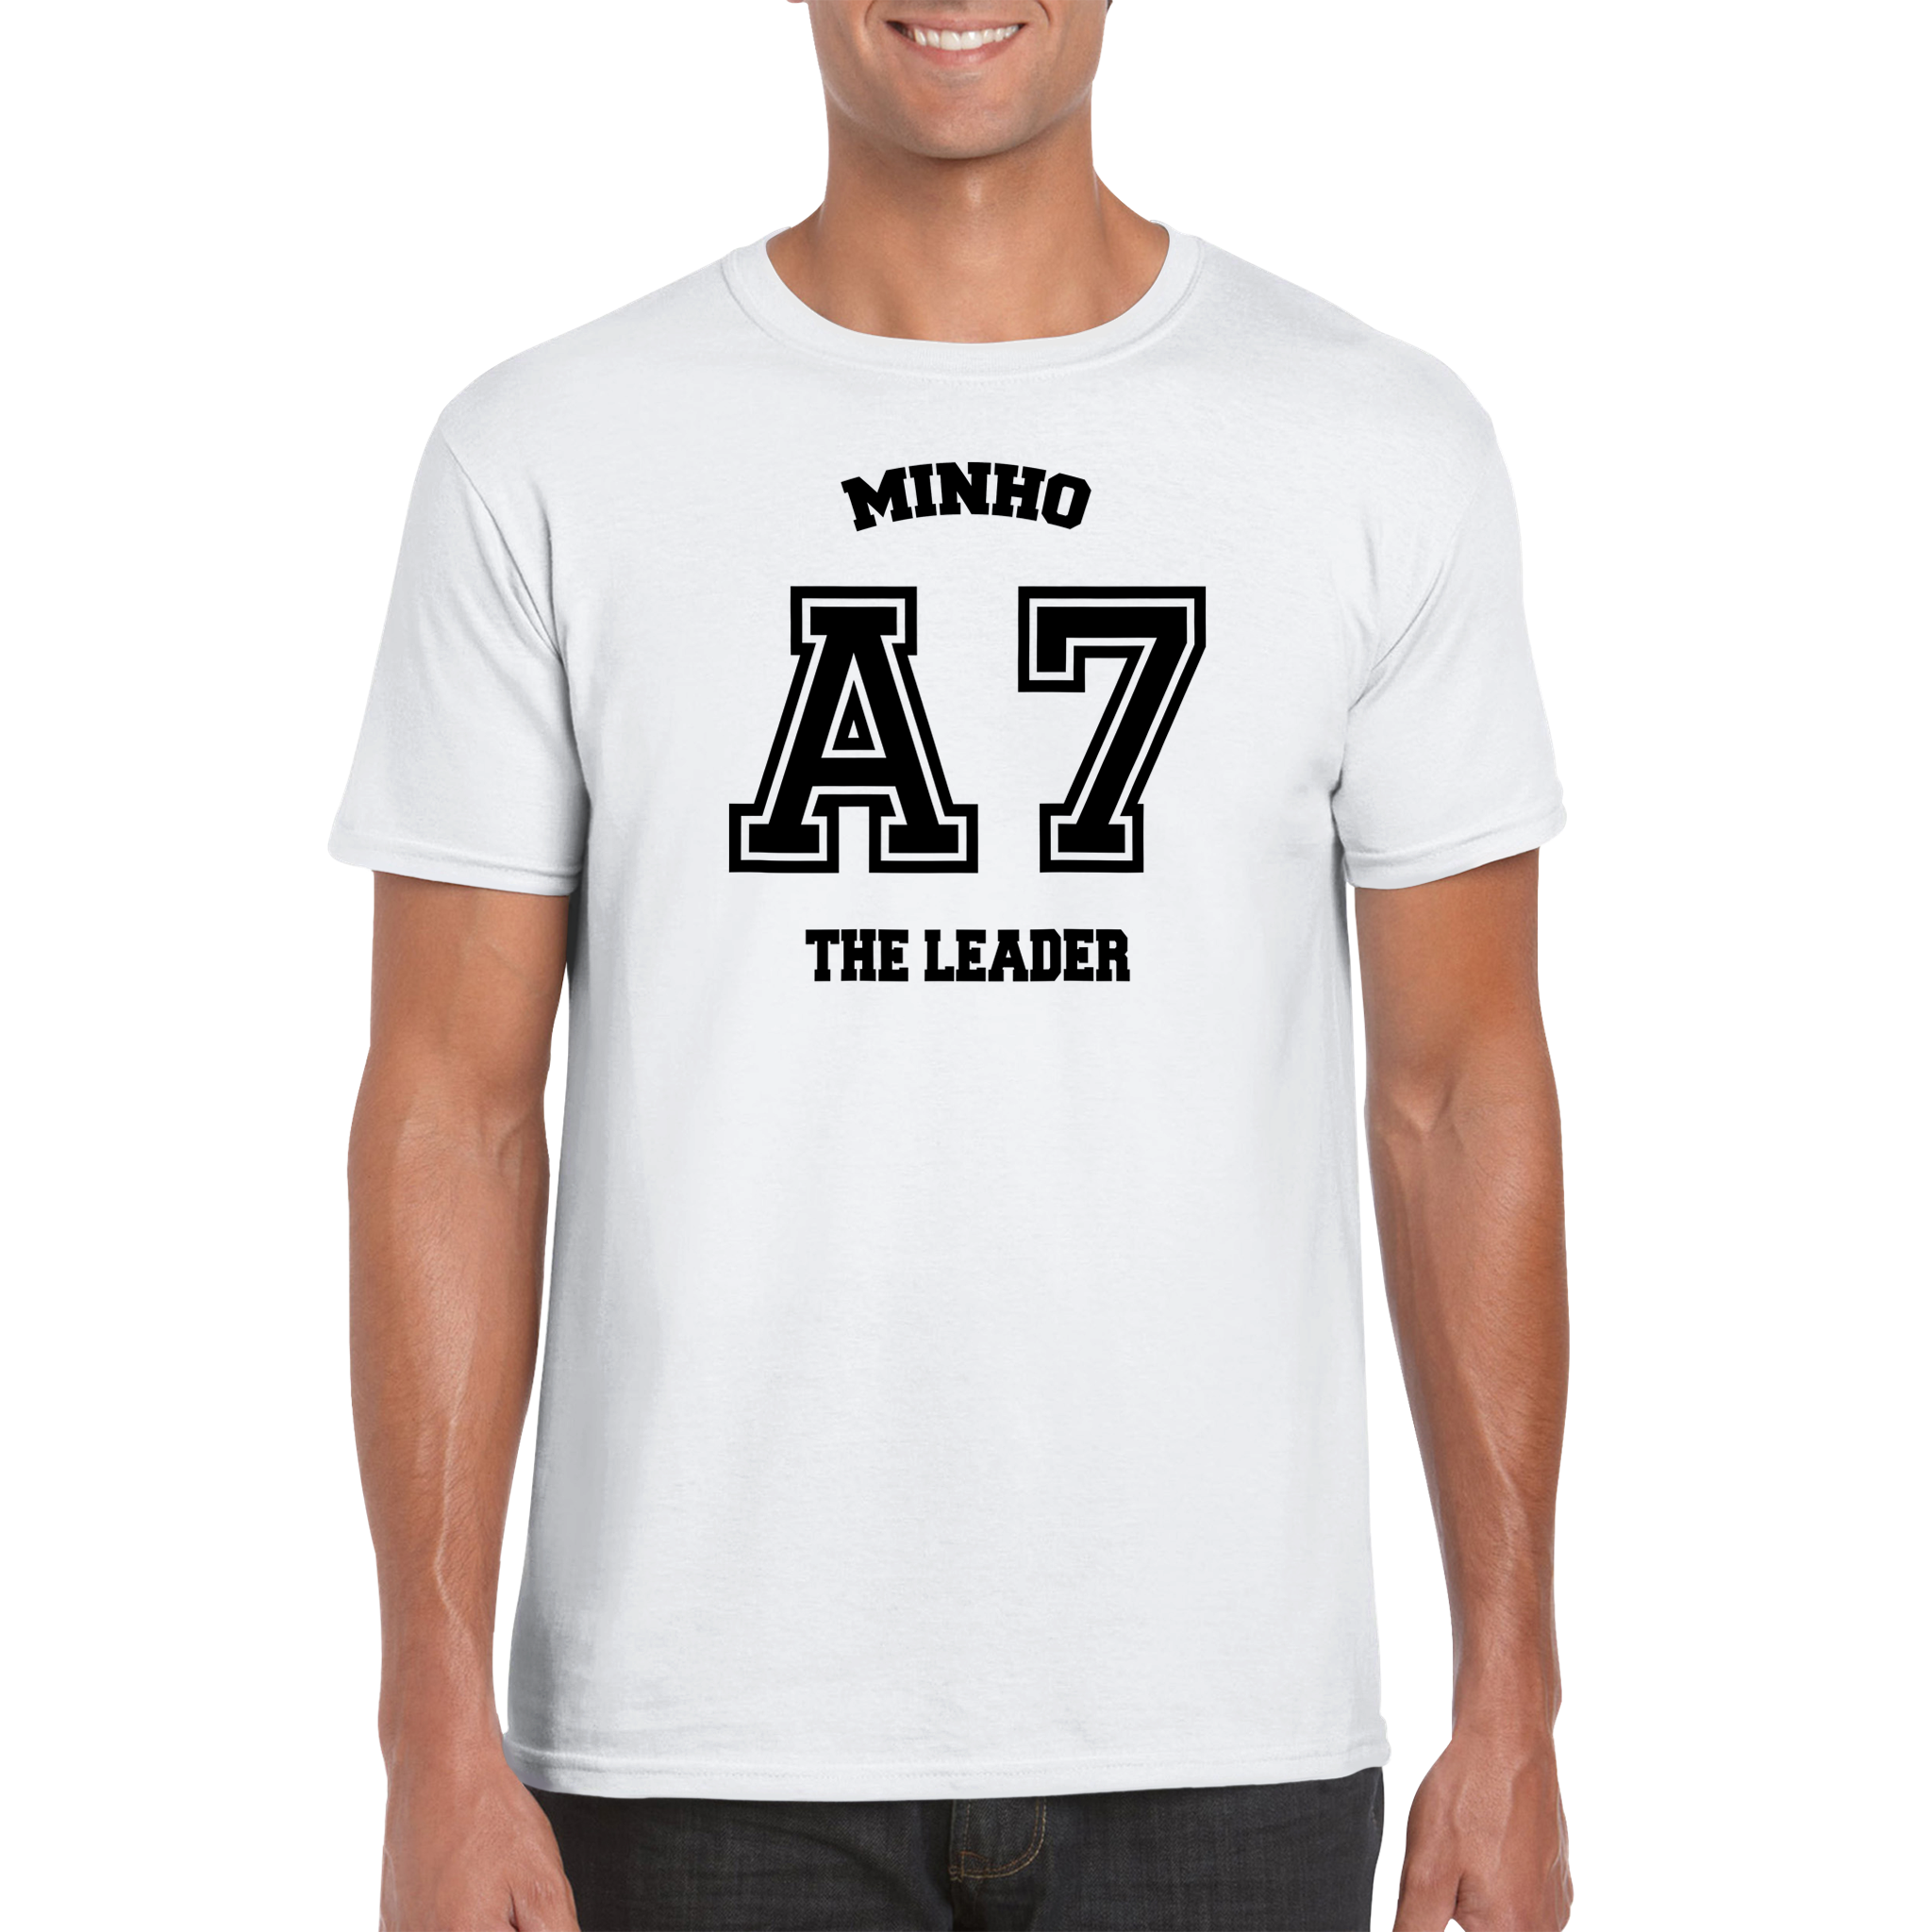 T-shirt Minho A7 - The Leader